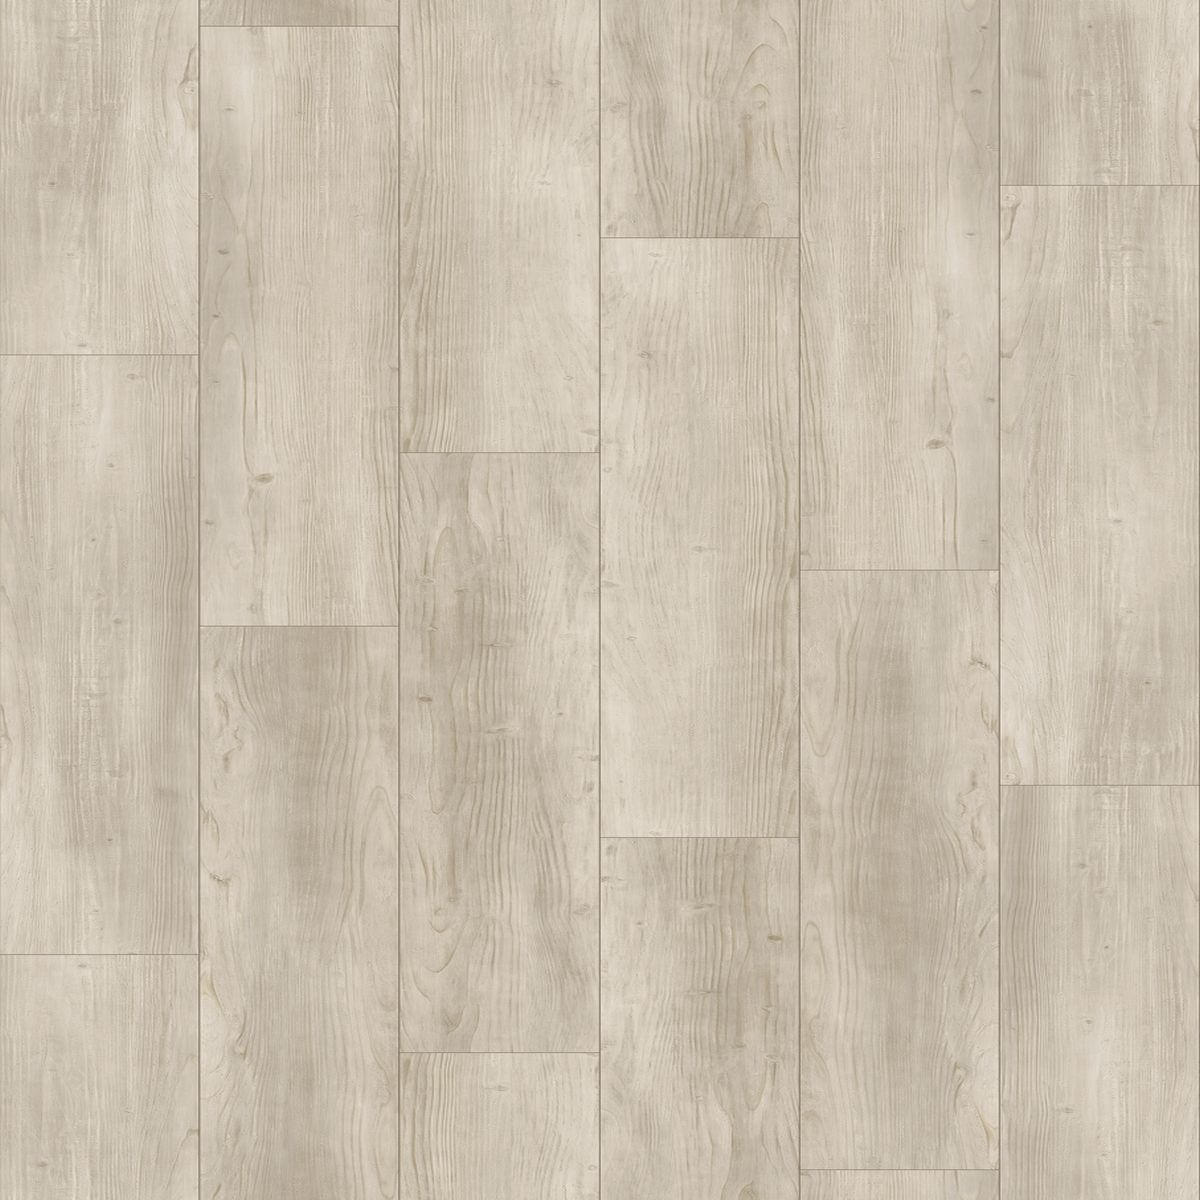 Designboden Pine Grau MODULAR ONE 1730774  per  m² - Hellgrau/Pinienfarben, Basics, Holz/Kunststoff (128,5/19,4/0,8cm) - Parador